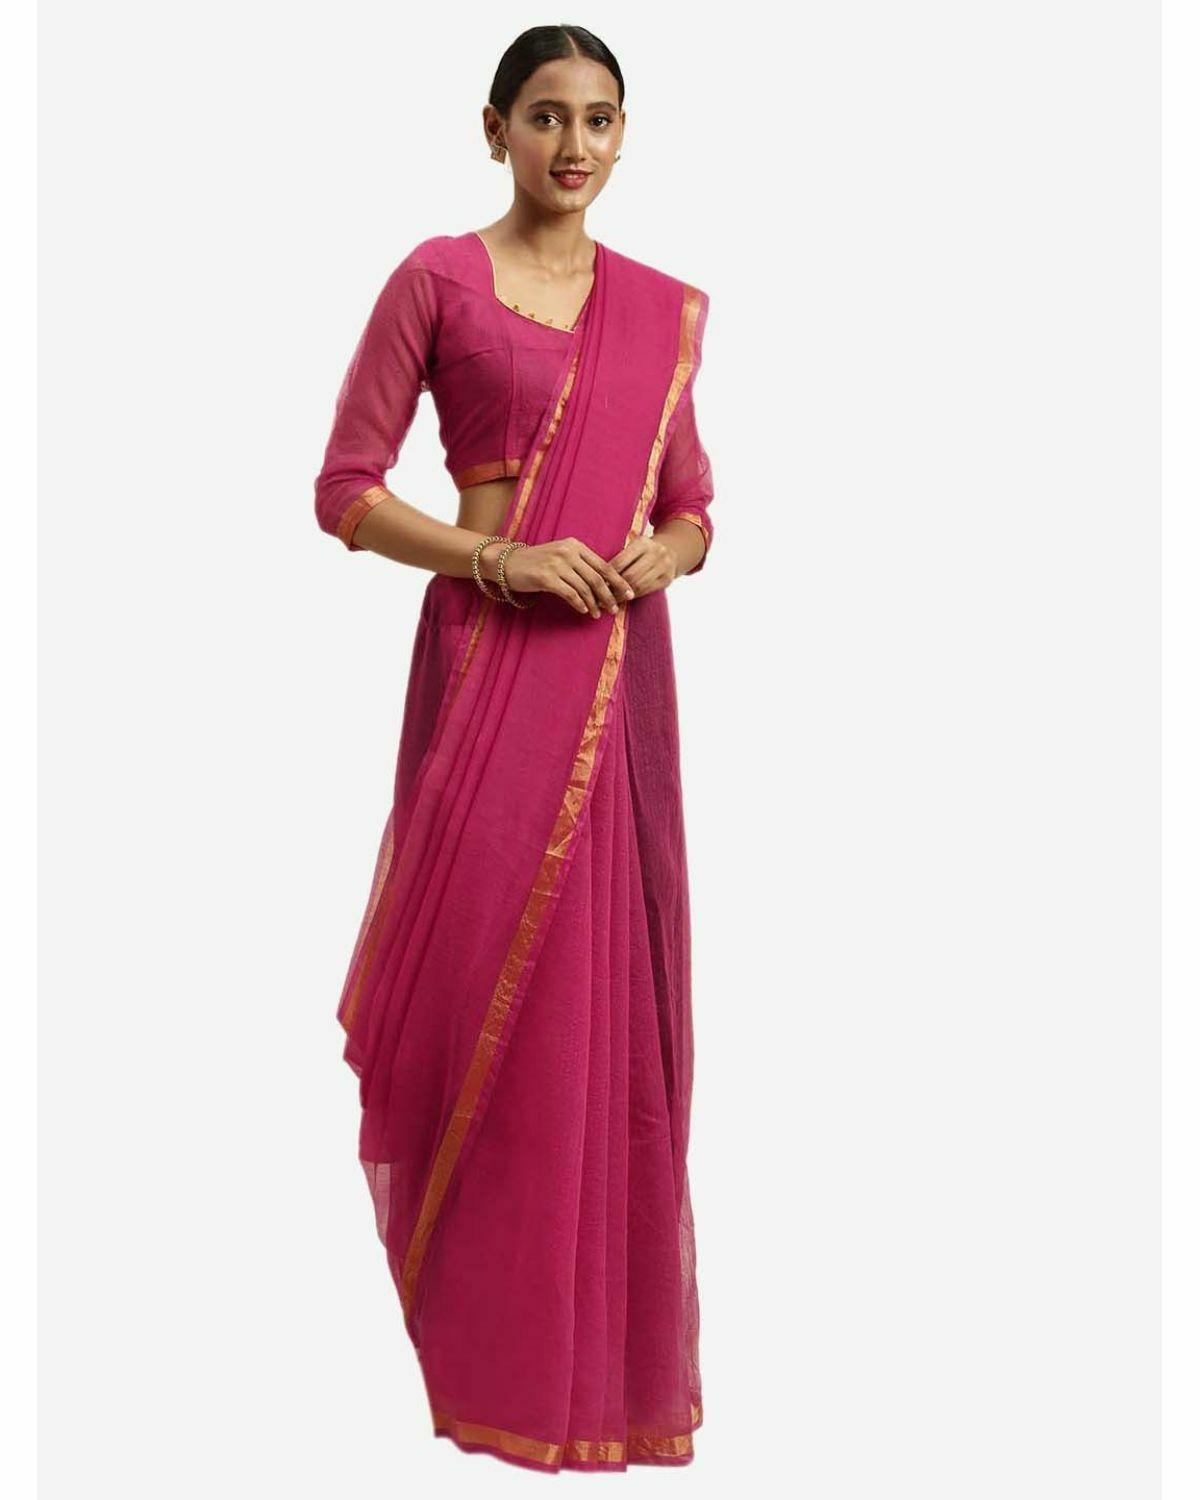 Poonam Kaur in a plain saree and Kalamkari blouse – South India Fashion